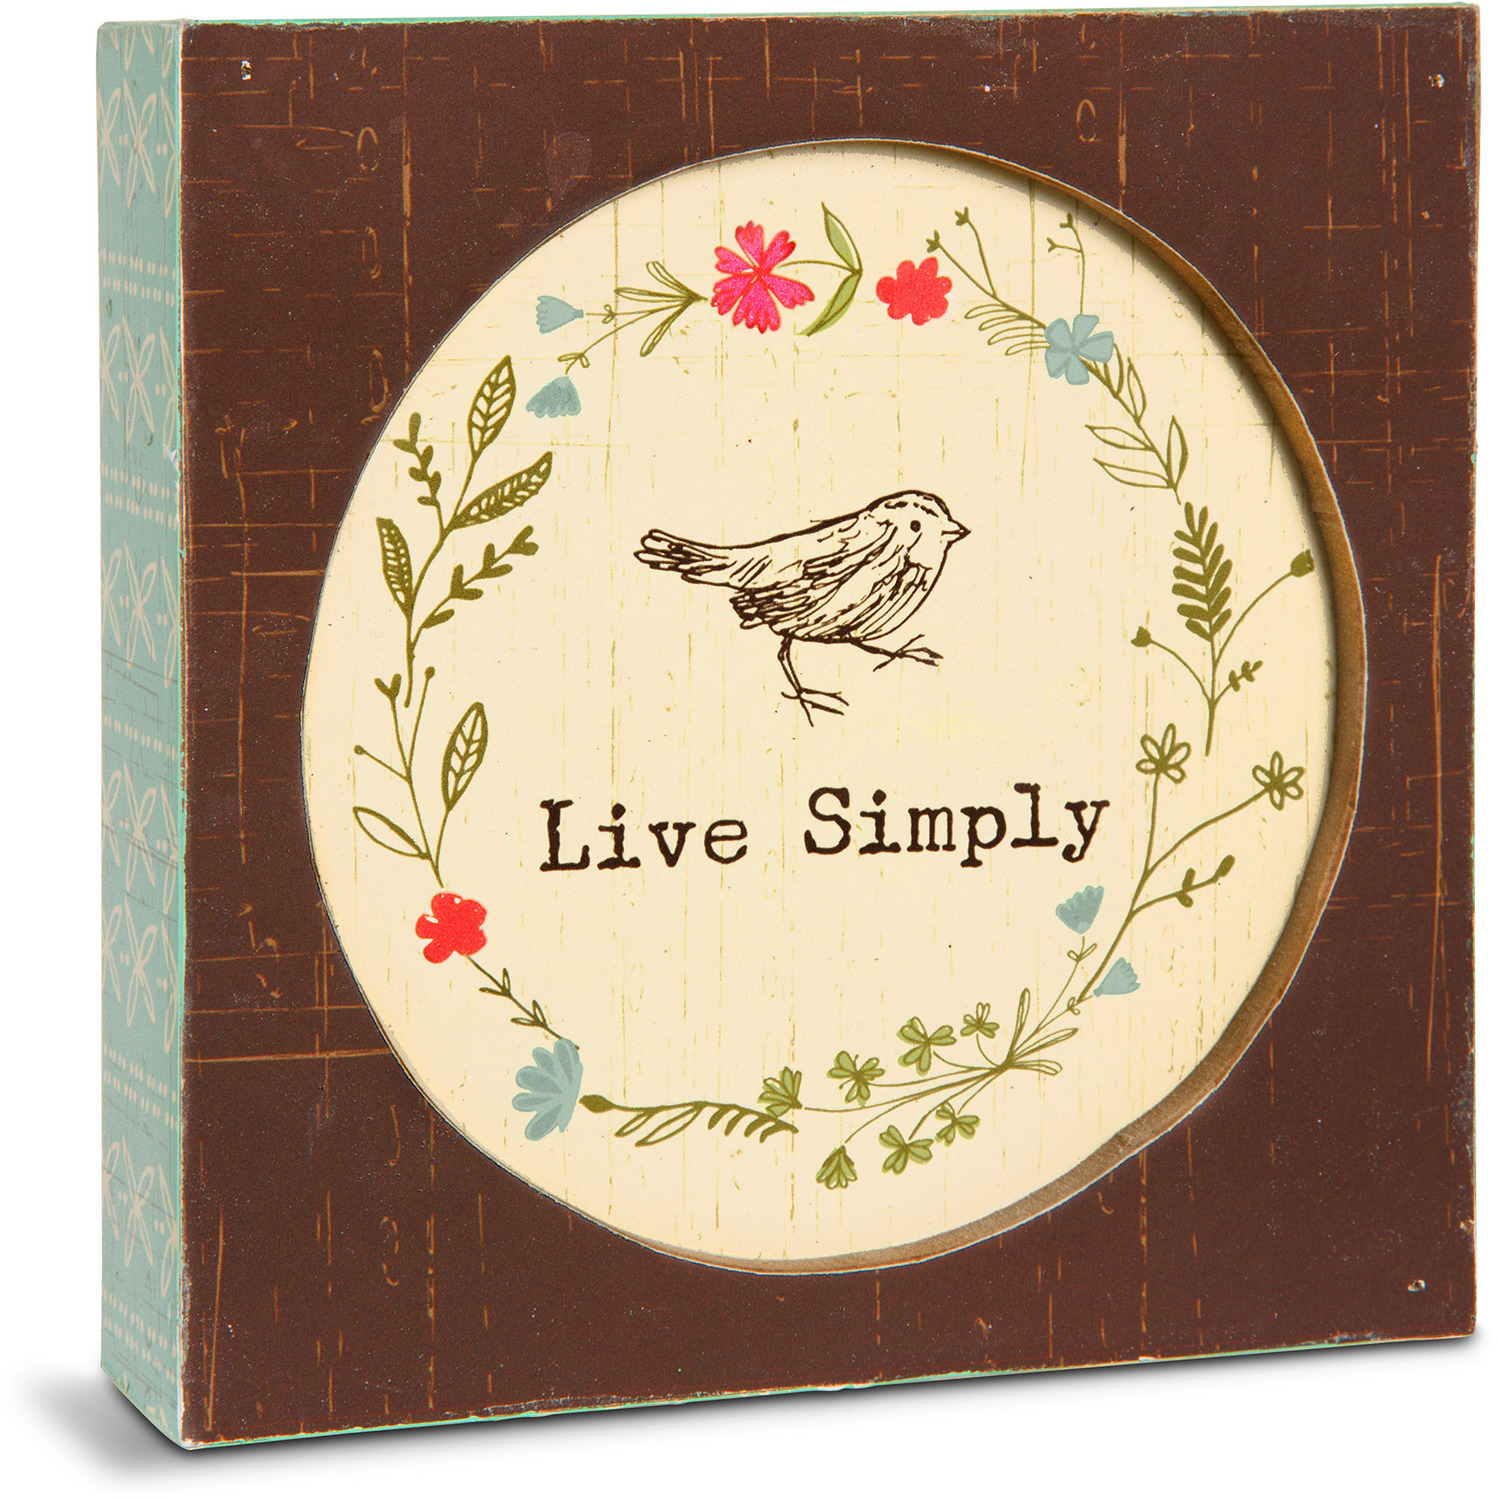 Live Simply by Live Simply by Amylee - Live Simply - 4.5" x 4.5" Plaque